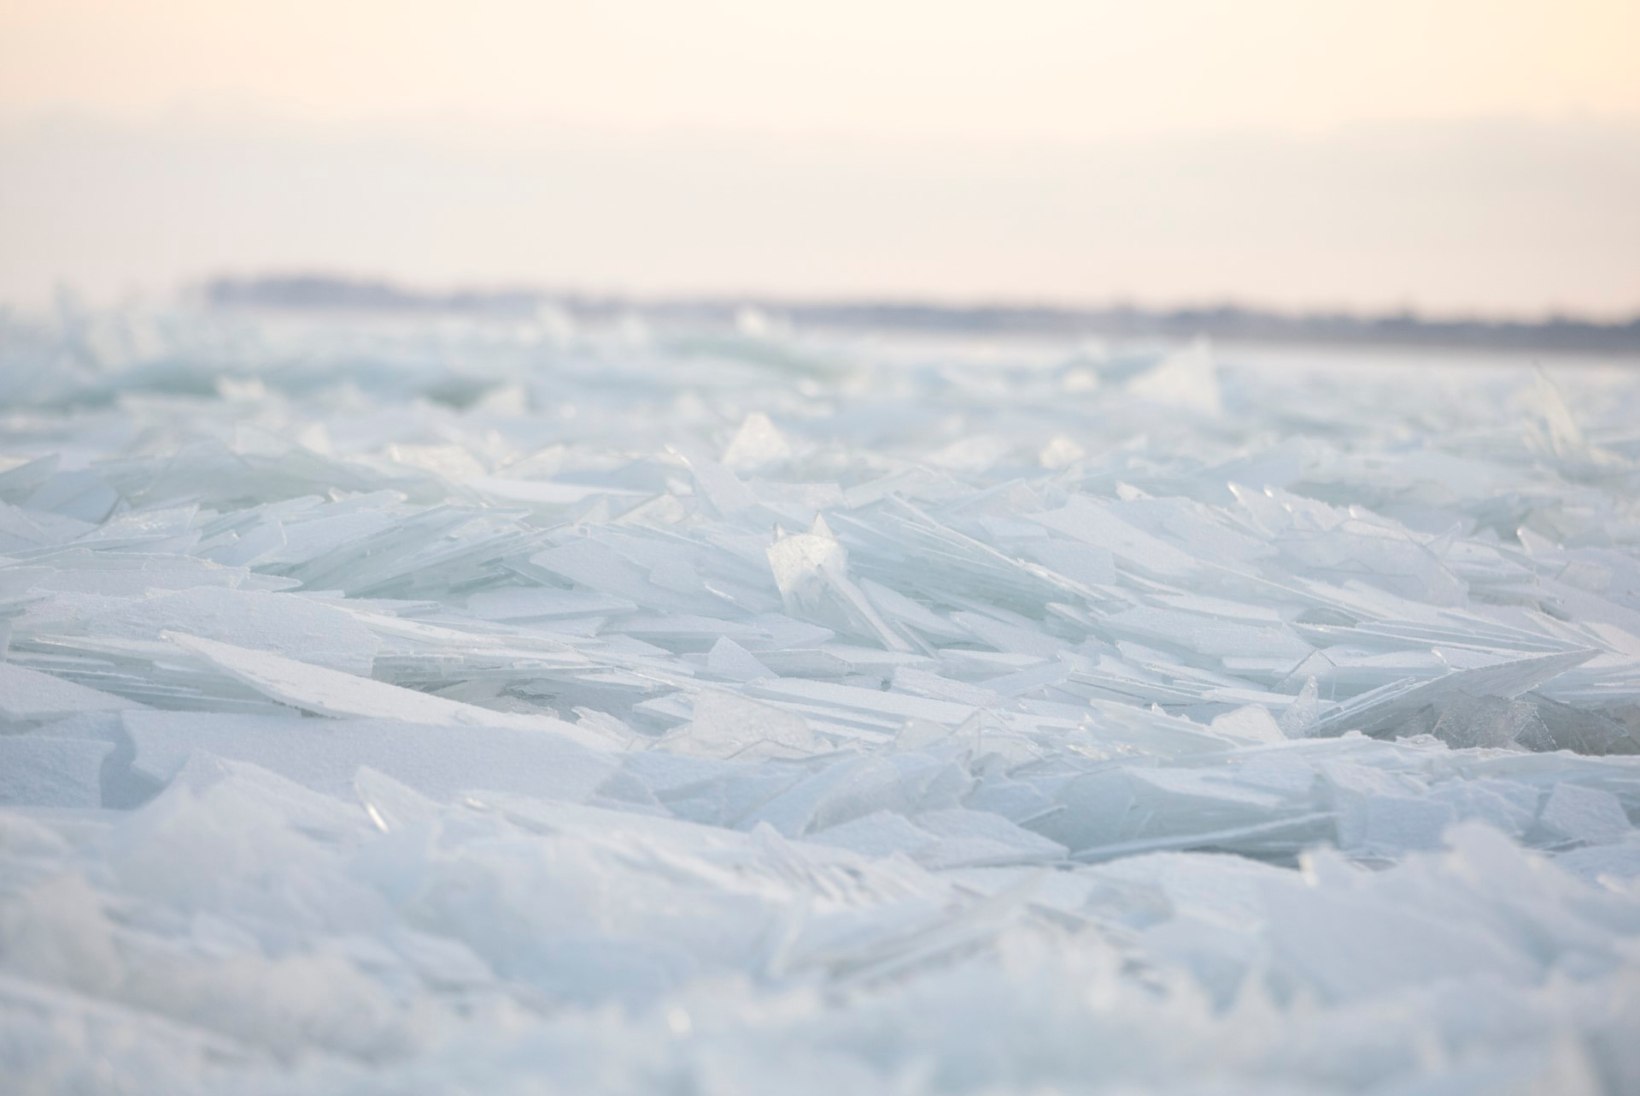 Pragunev jää jättis täna Peipsil lõksu sadakond kalurit